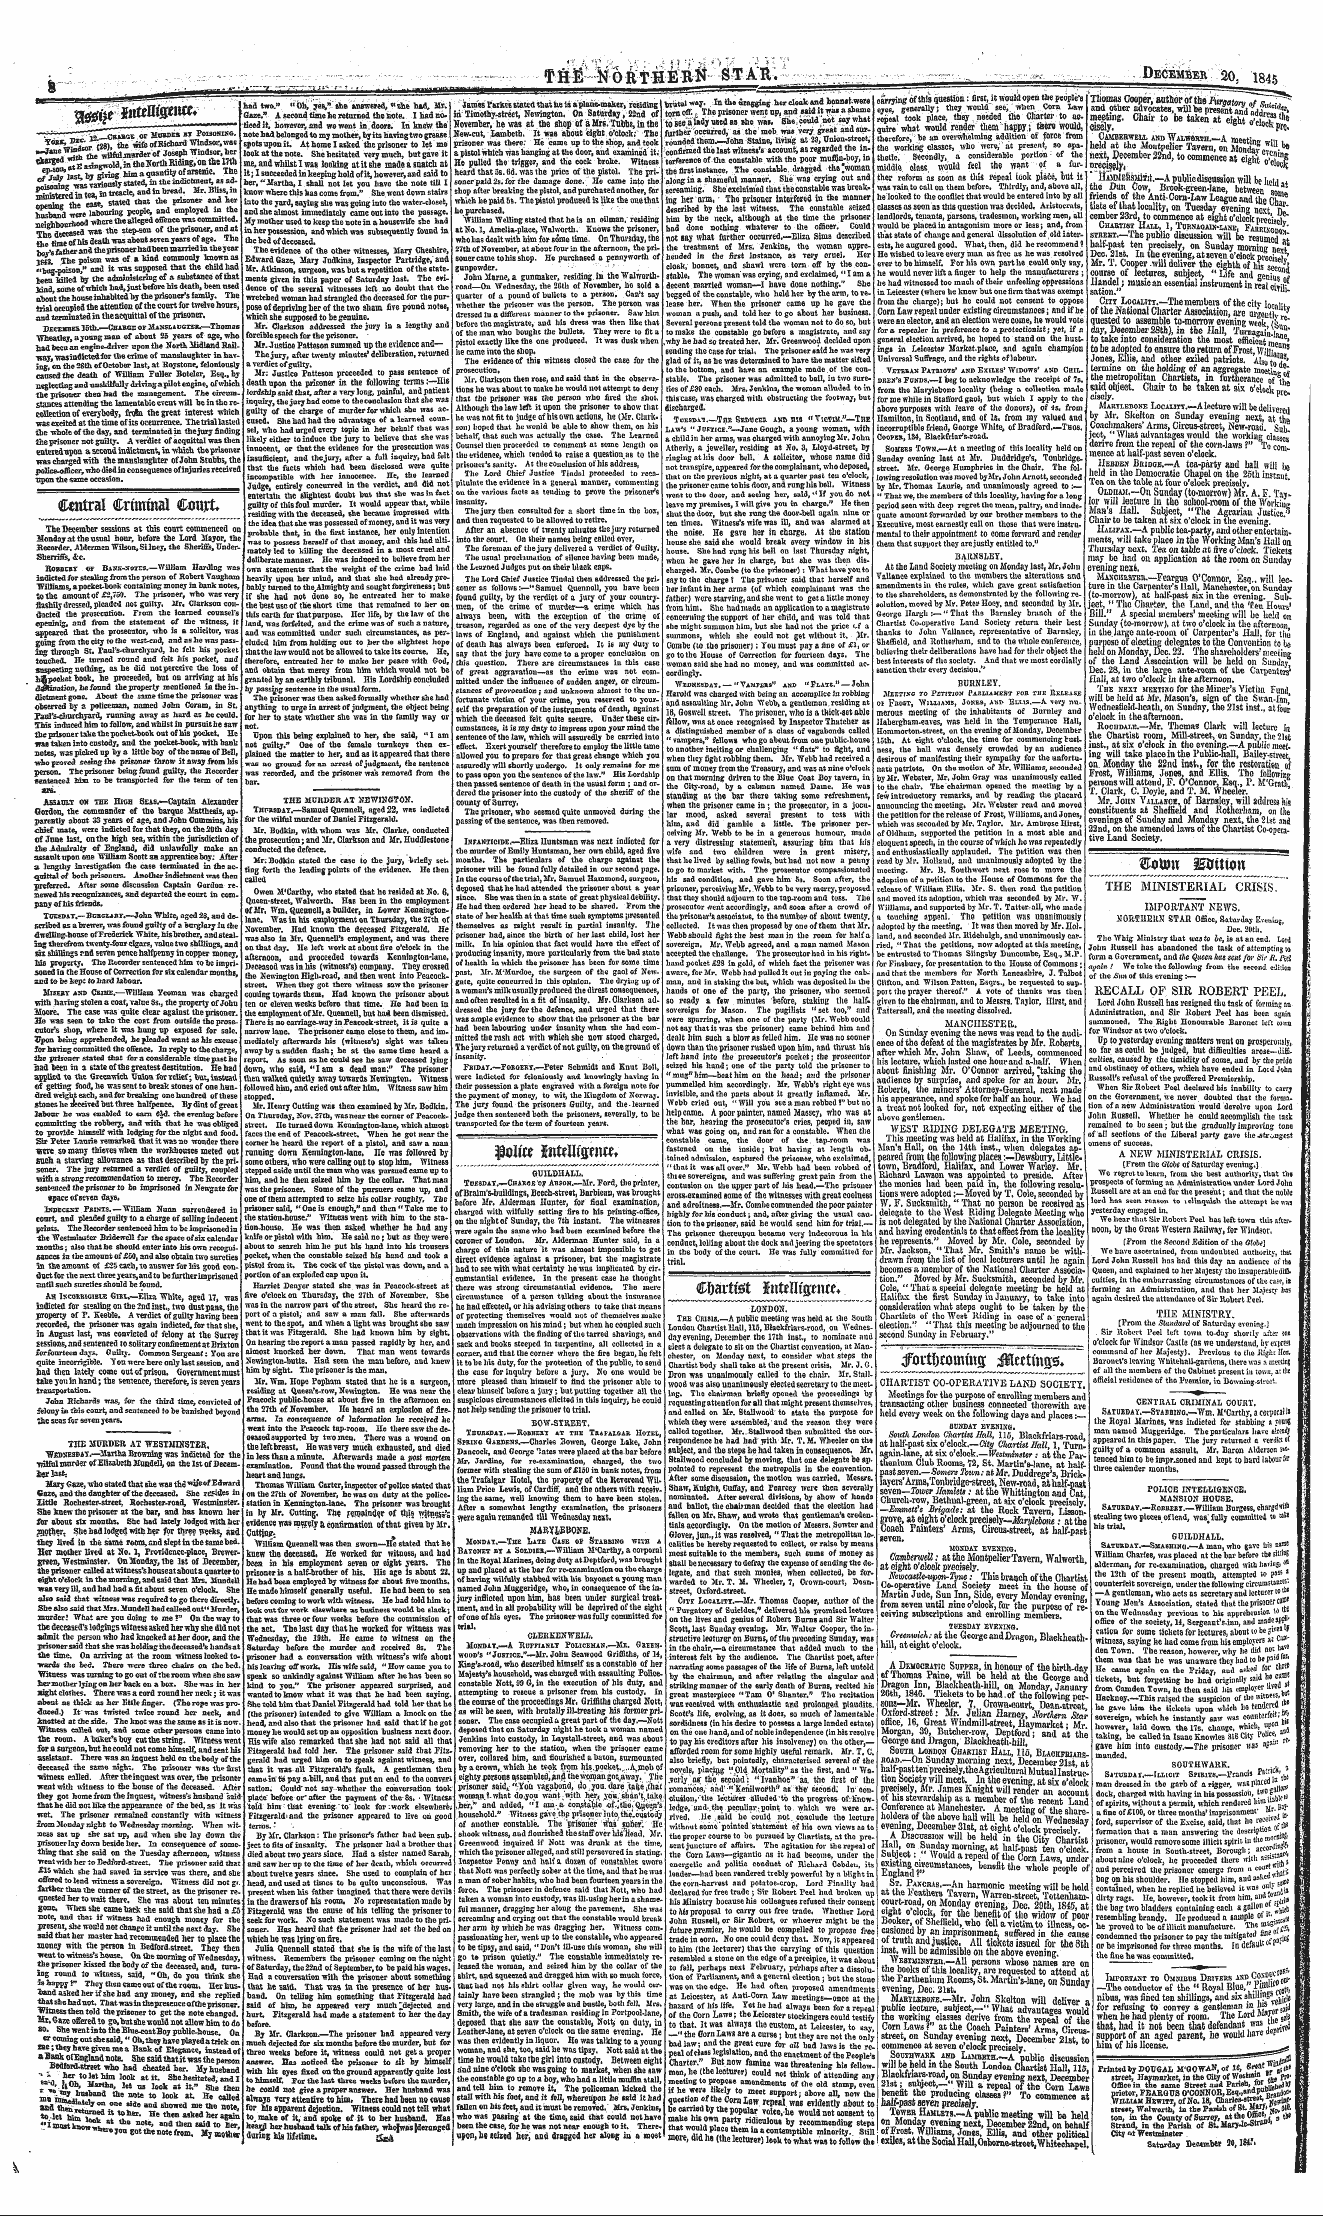 Northern Star (1837-1852): jS F Y, 4th edition - Lonbon. The Crisis.— A Public Meeting Wa...